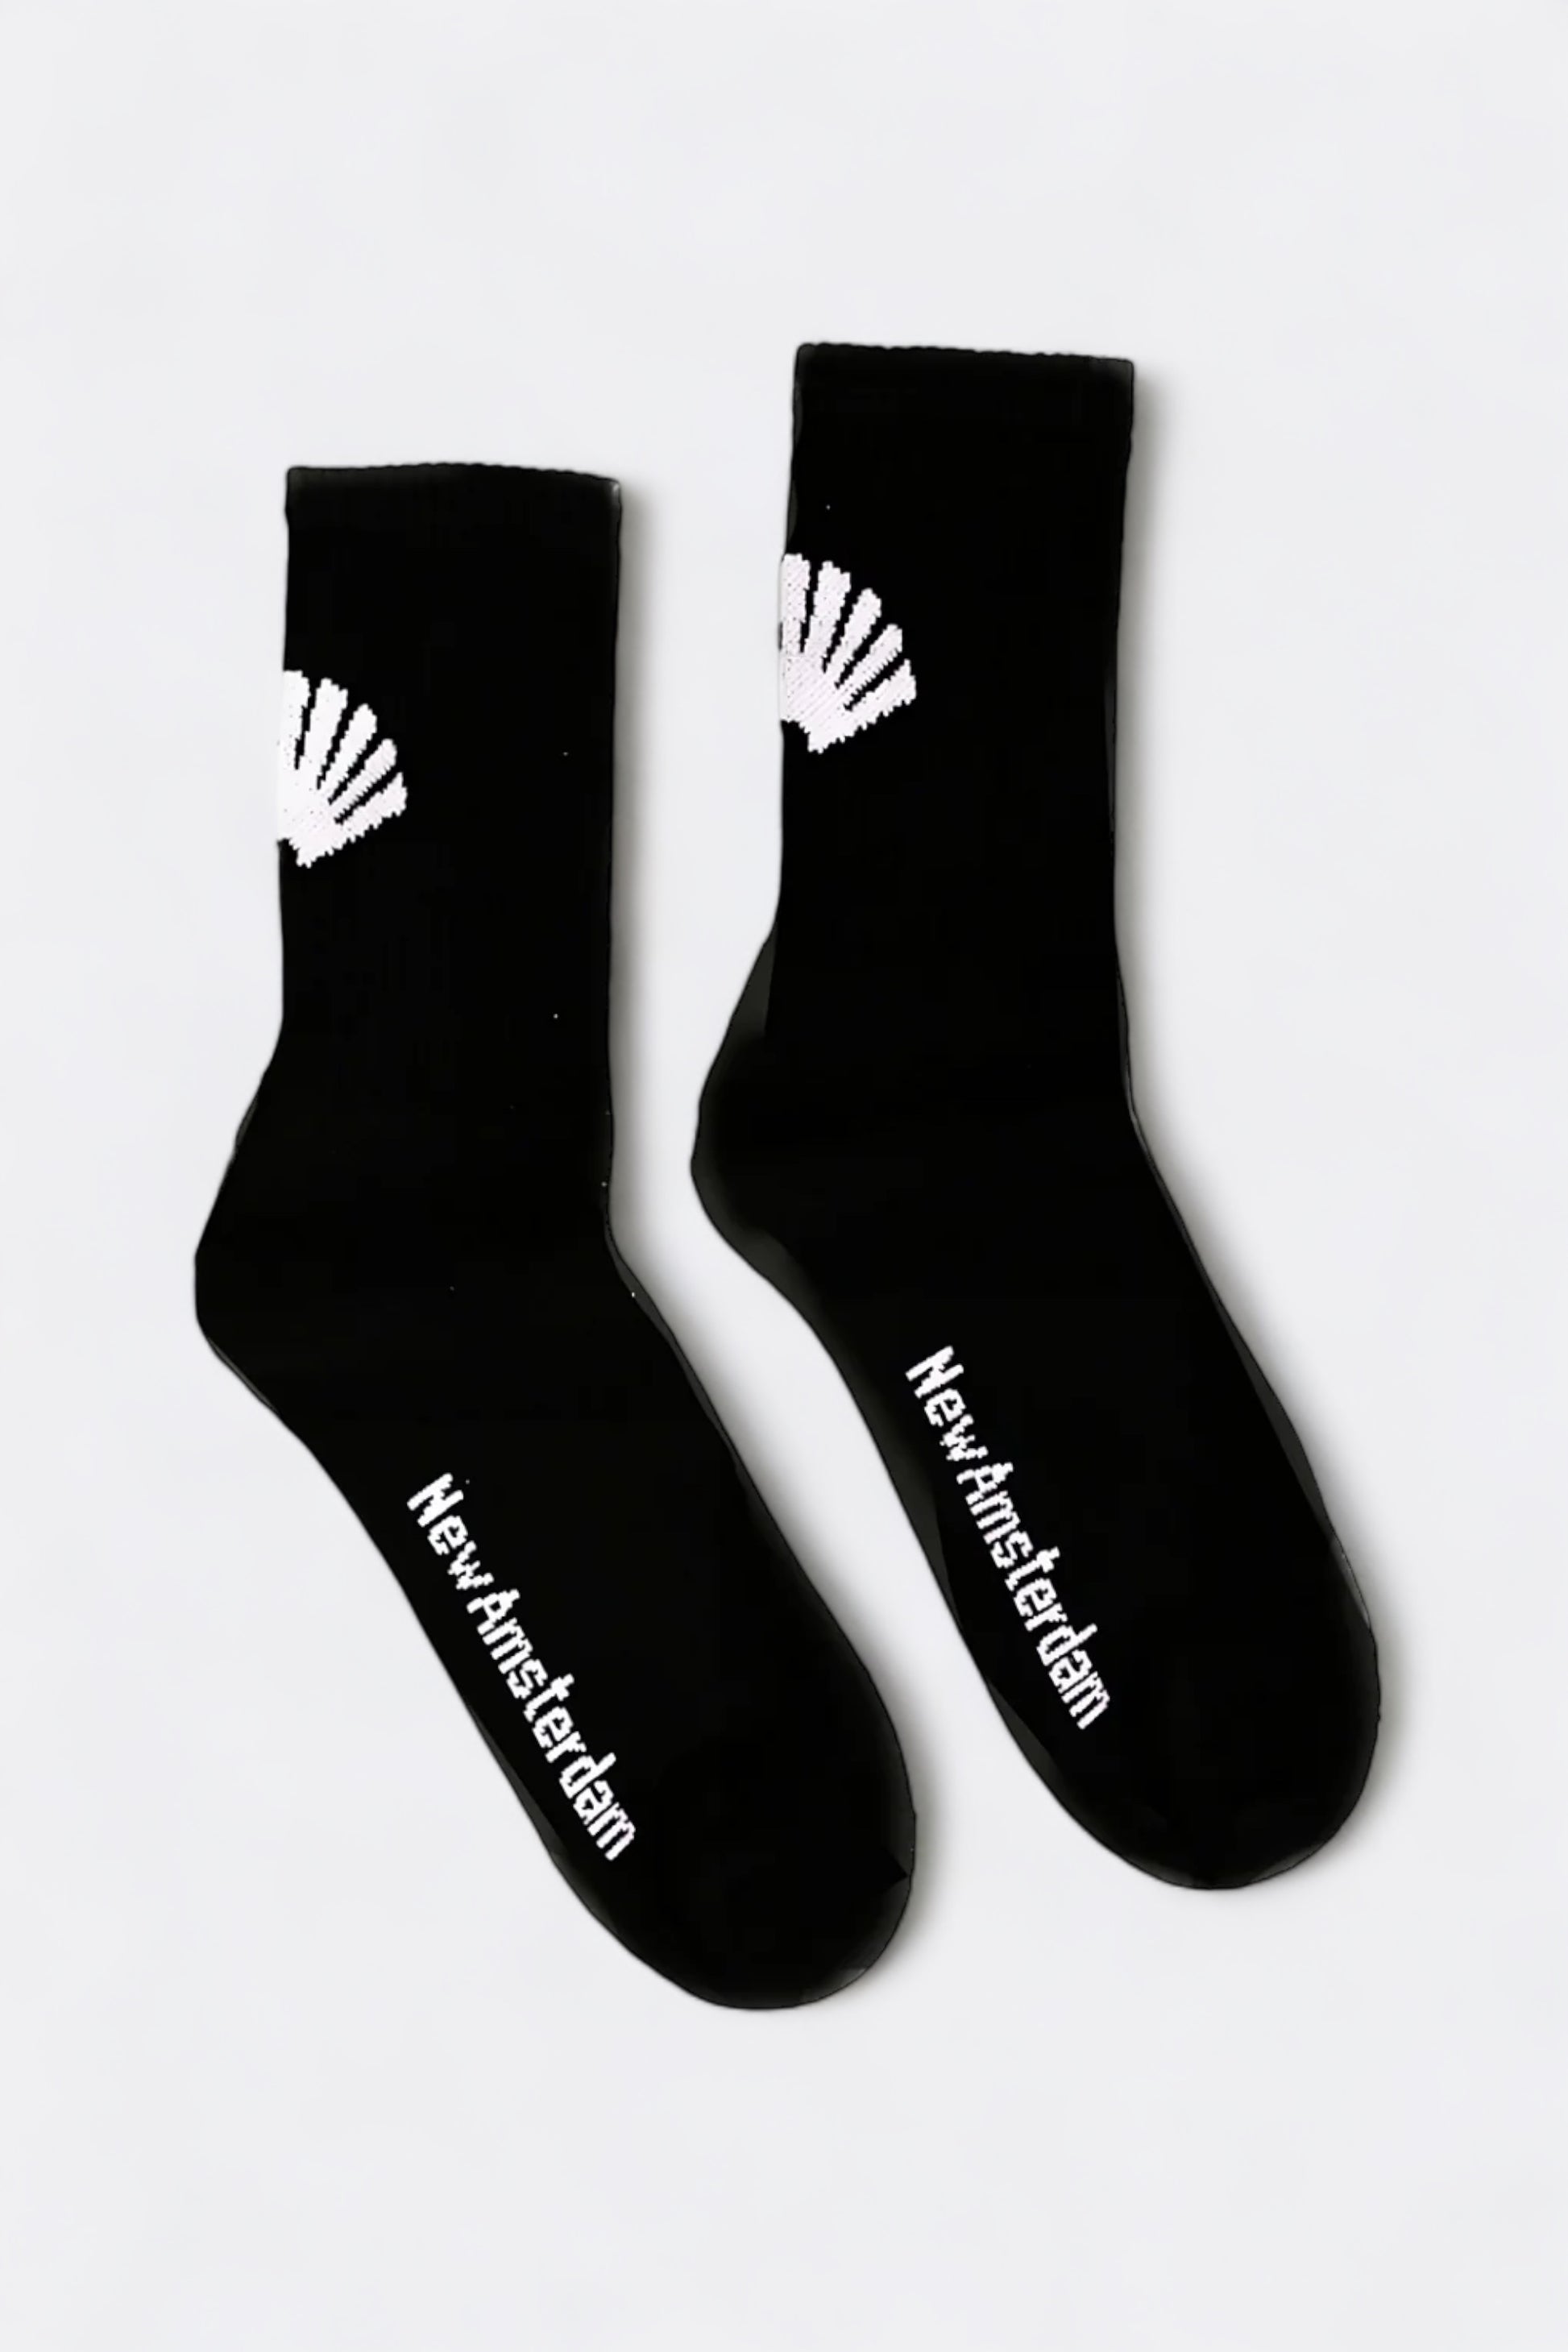 New Amsterdam Surf Association - Logo Sock (Black)